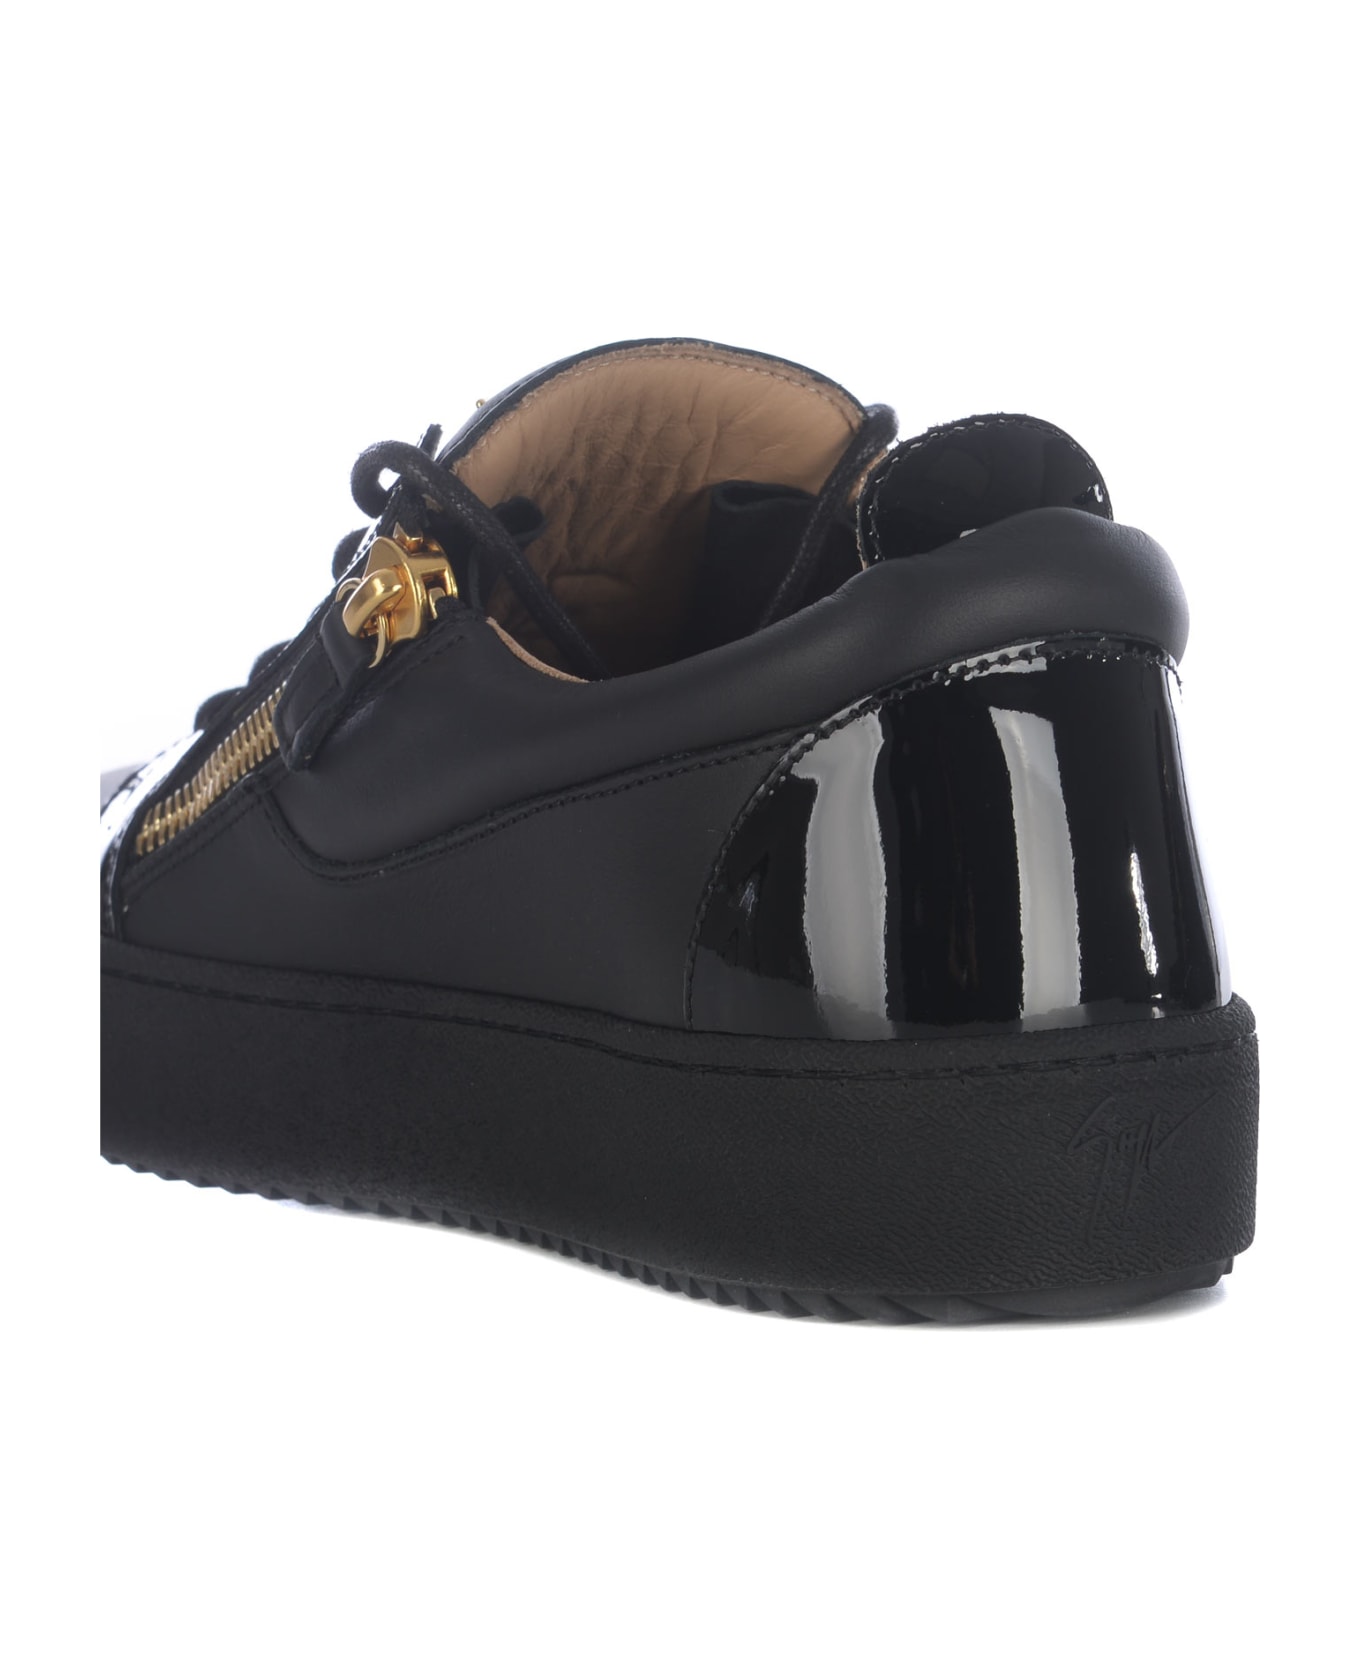 Giuseppe Zanotti Sneakers Giuseppe Zanotti "frenkie" Made Of Leather - Nero